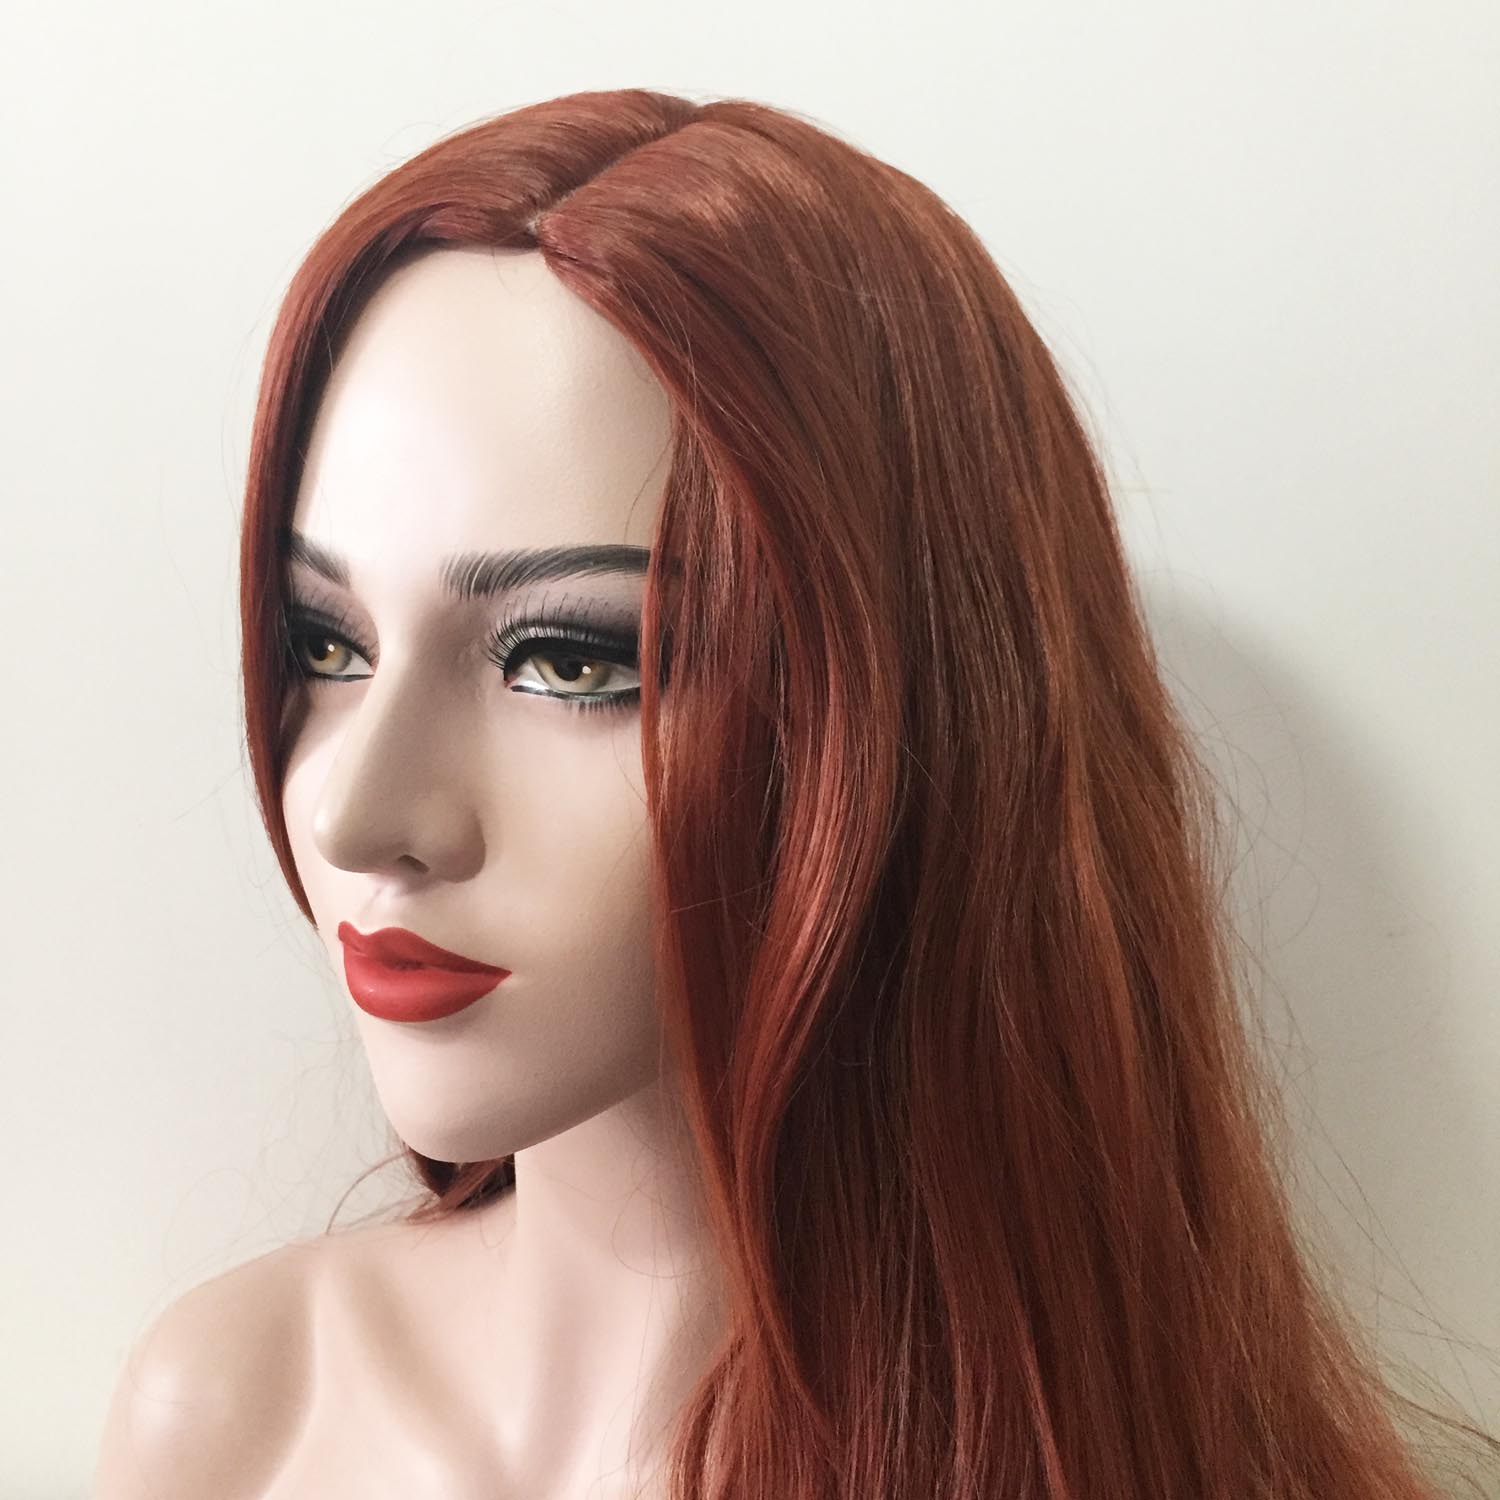 nevermindyrhead Women Auburn Red Brown Long Wavy Side Part Layered Wig